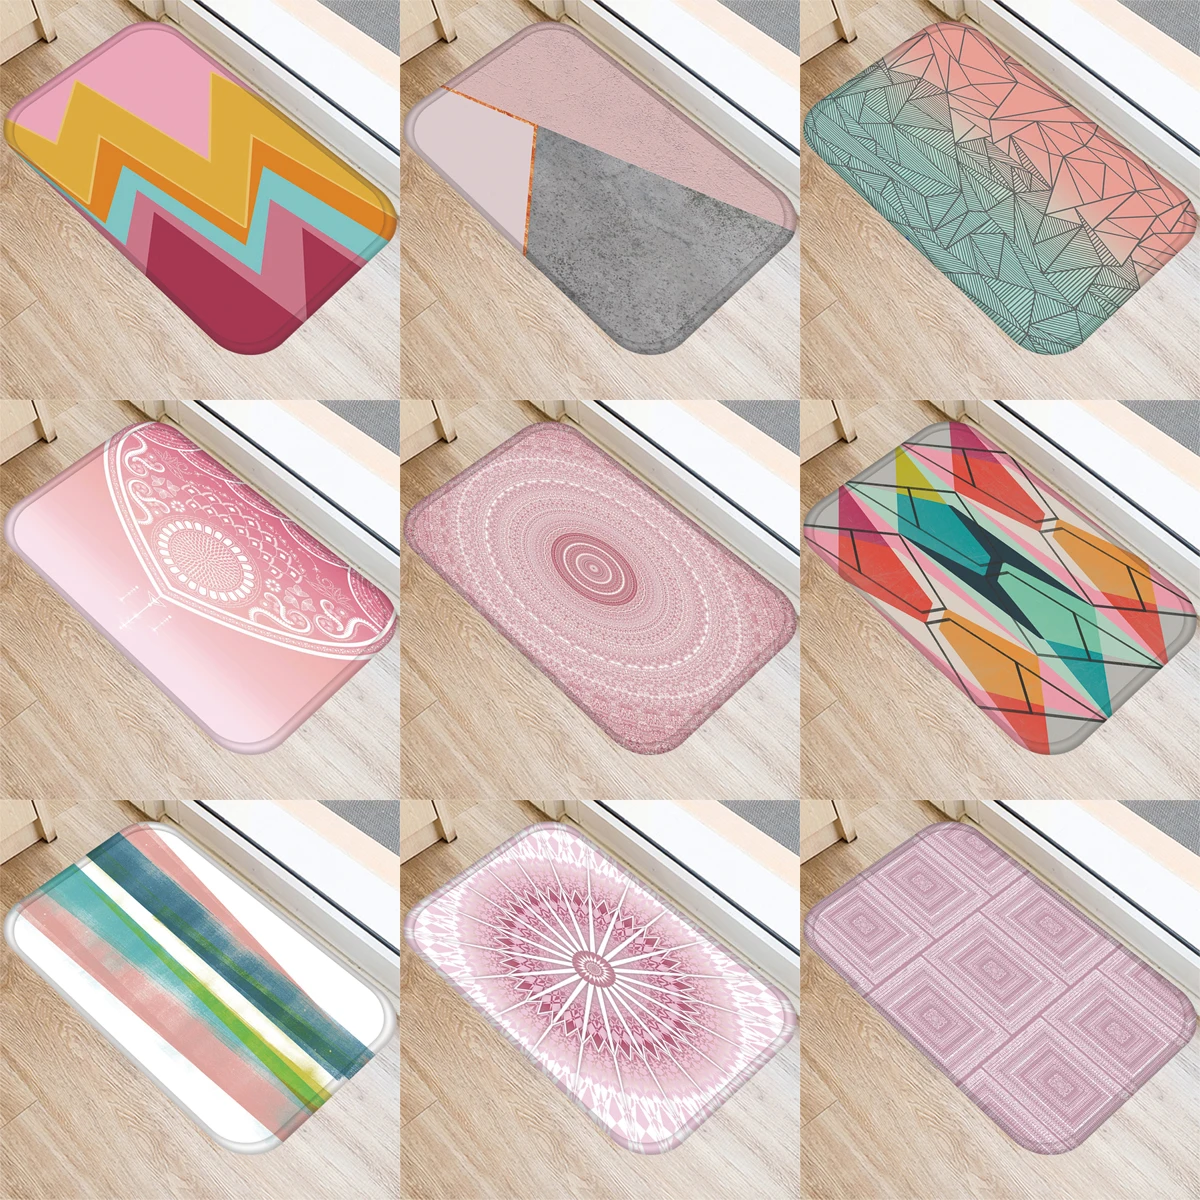 

ZHENHE Pink Geometry Mats Pattern Print Doormat Anti Slip Floor Carpet for Bathroom Kitchen Entrance Rugs Home Decor